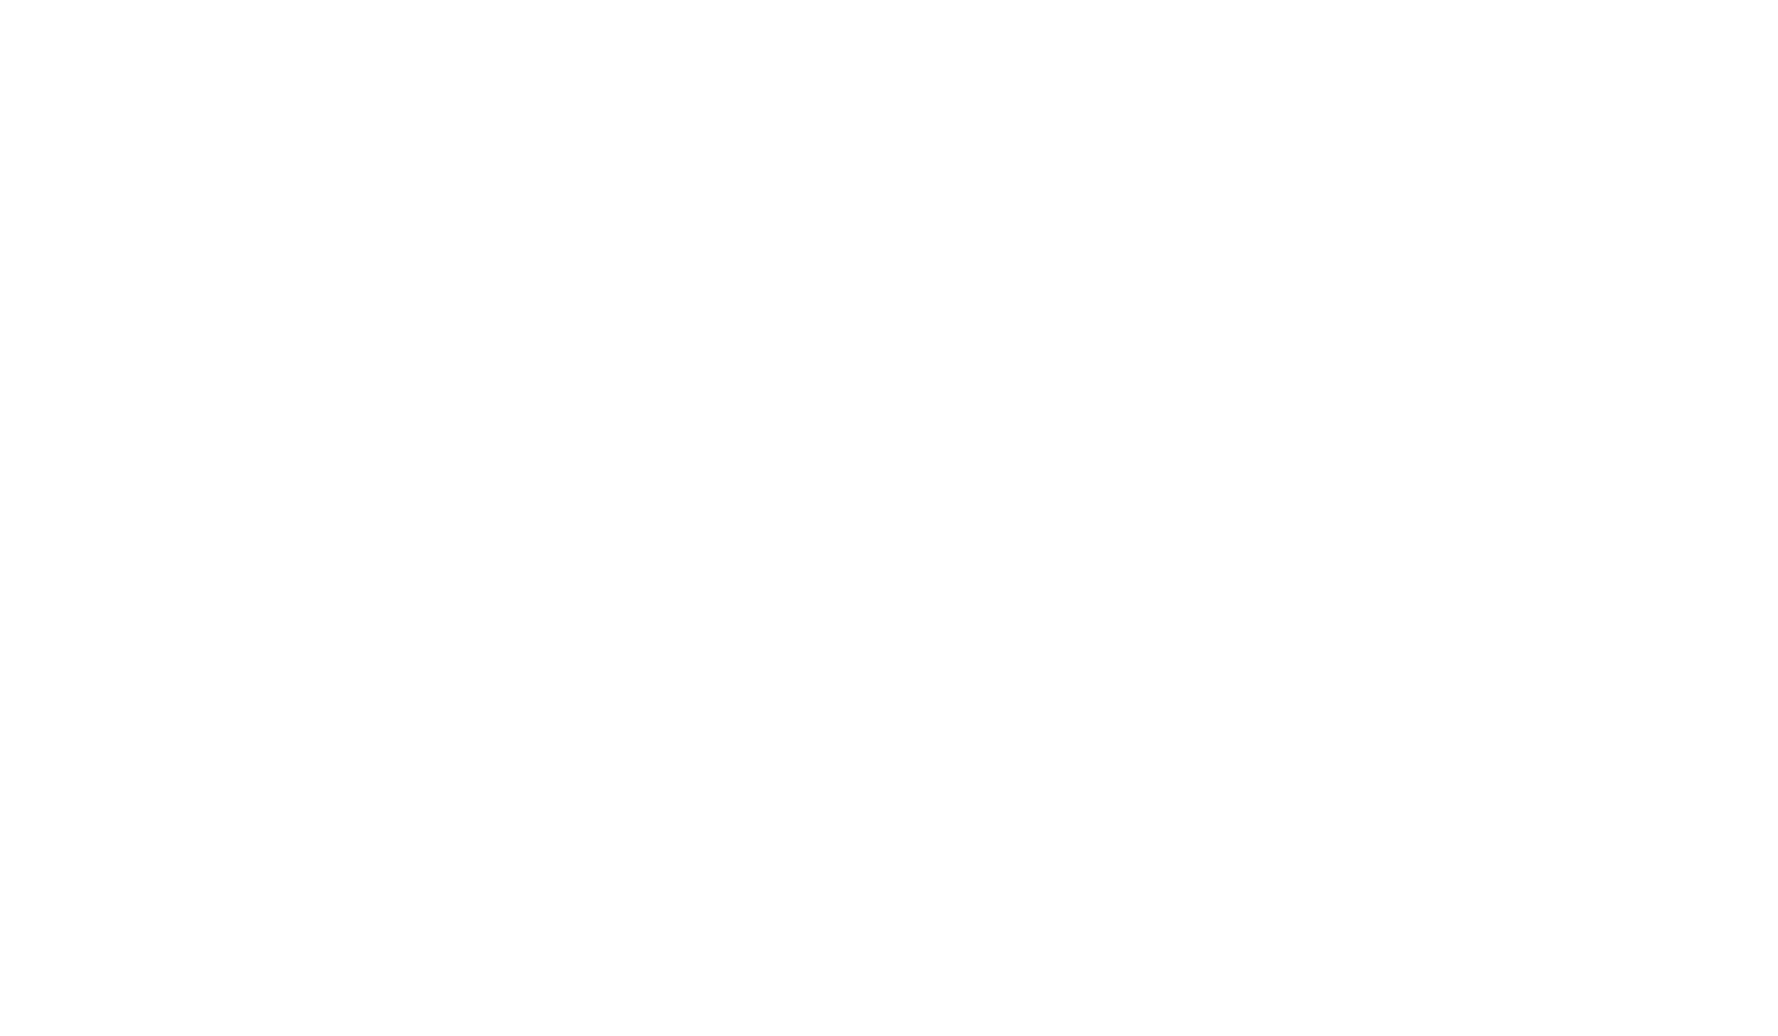 Saathof Forestry Services Ltd. 